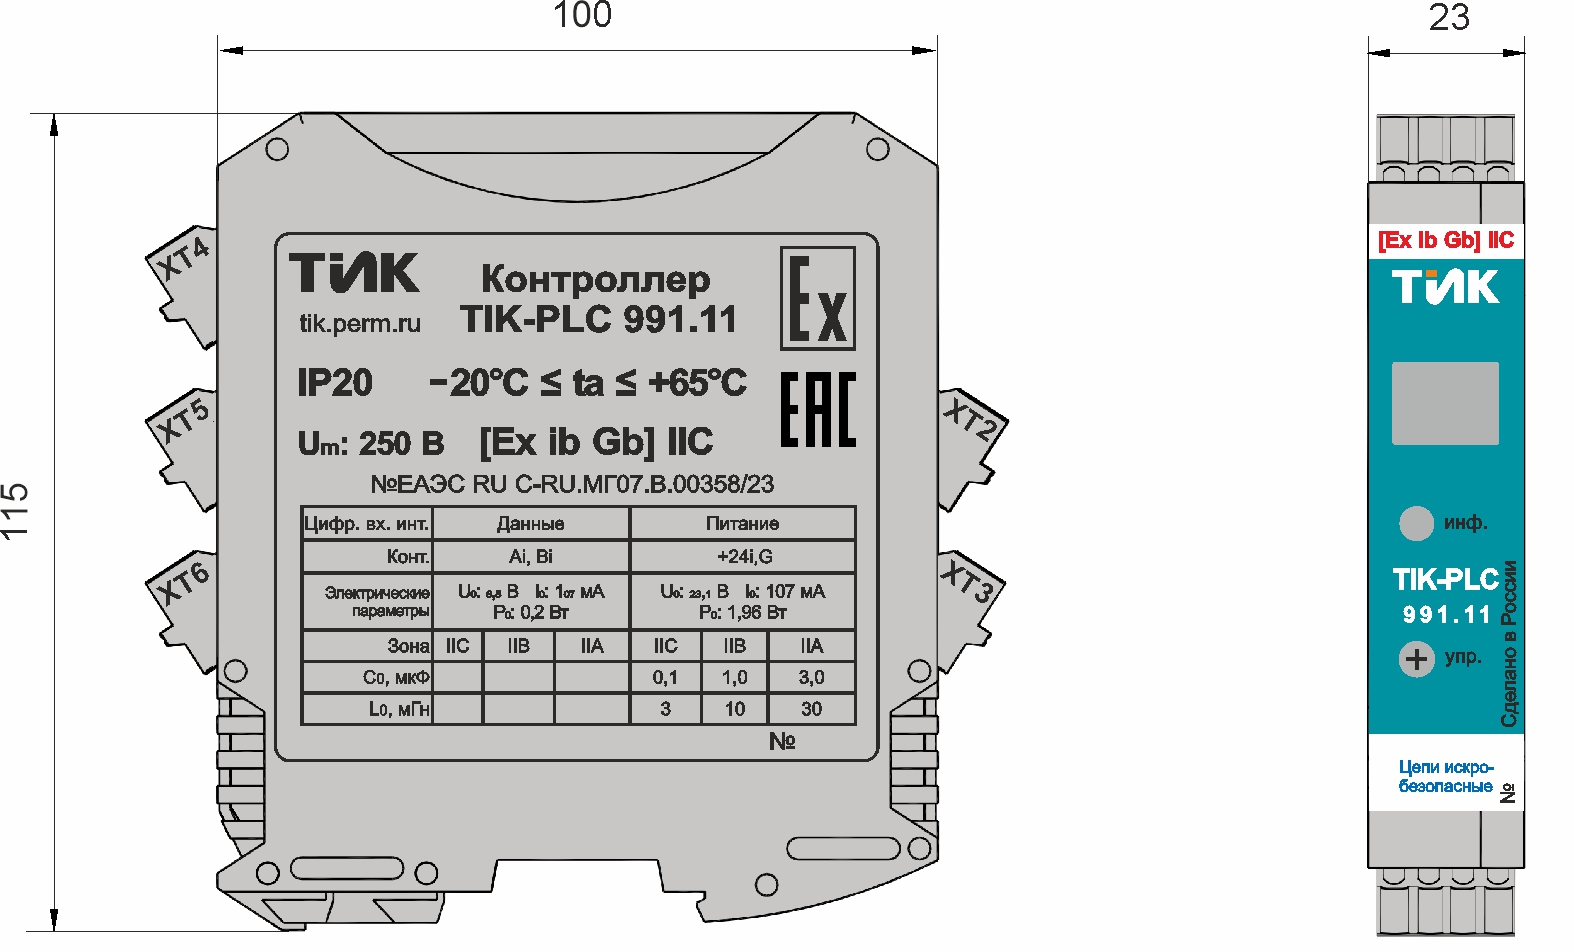 Constructive execution of TIK-PLC 991 controller